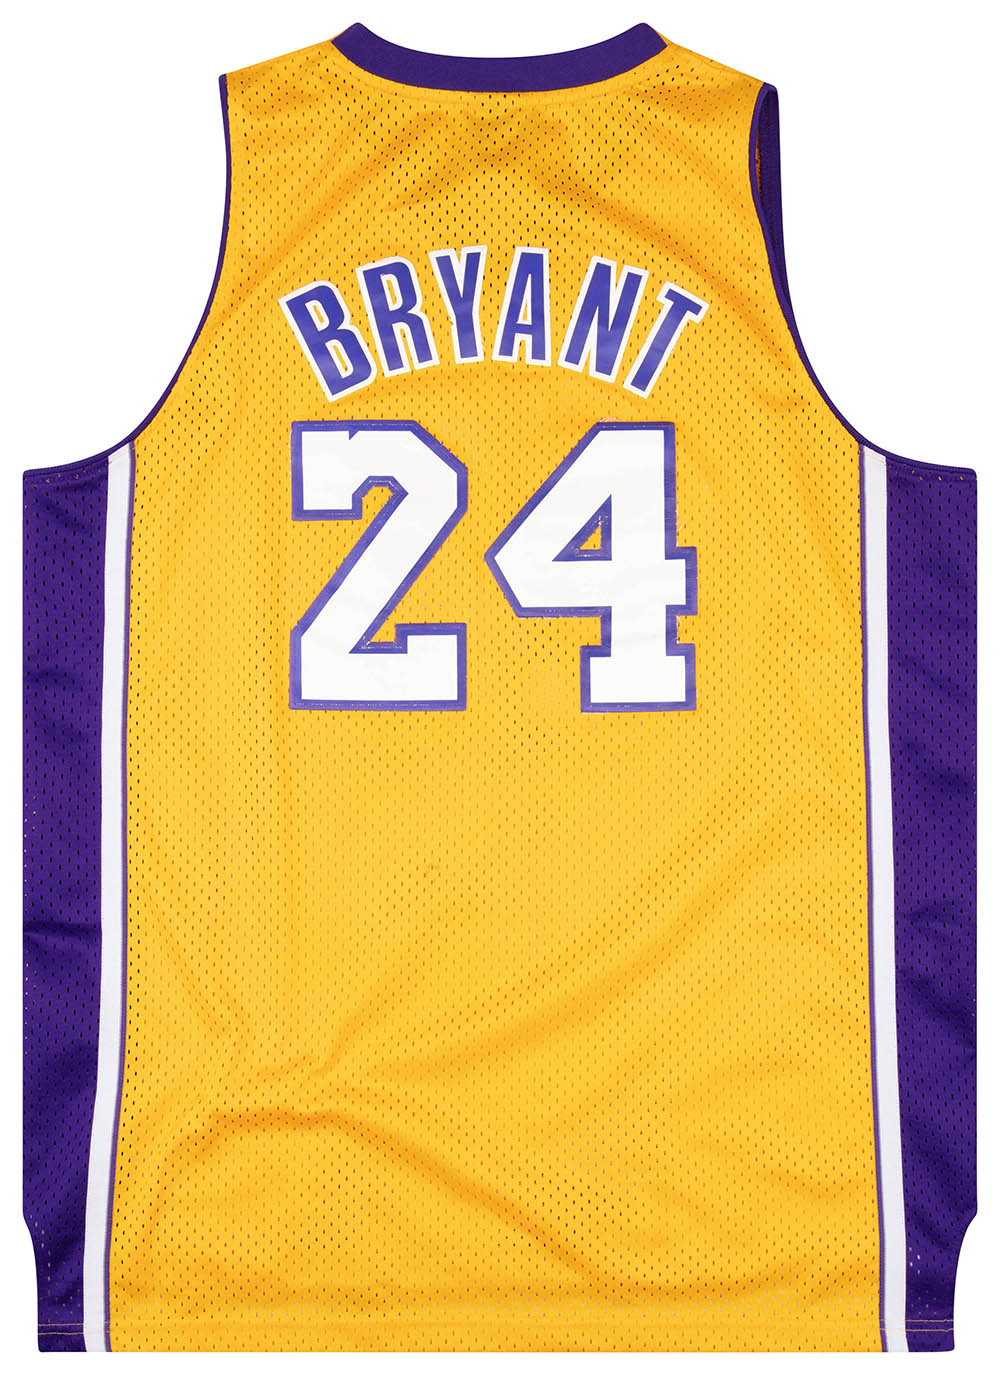 Adidas Kobe Bryant #24 Los Angeles Lakers Jersey S Clippers Vtg Jordan  Swingman